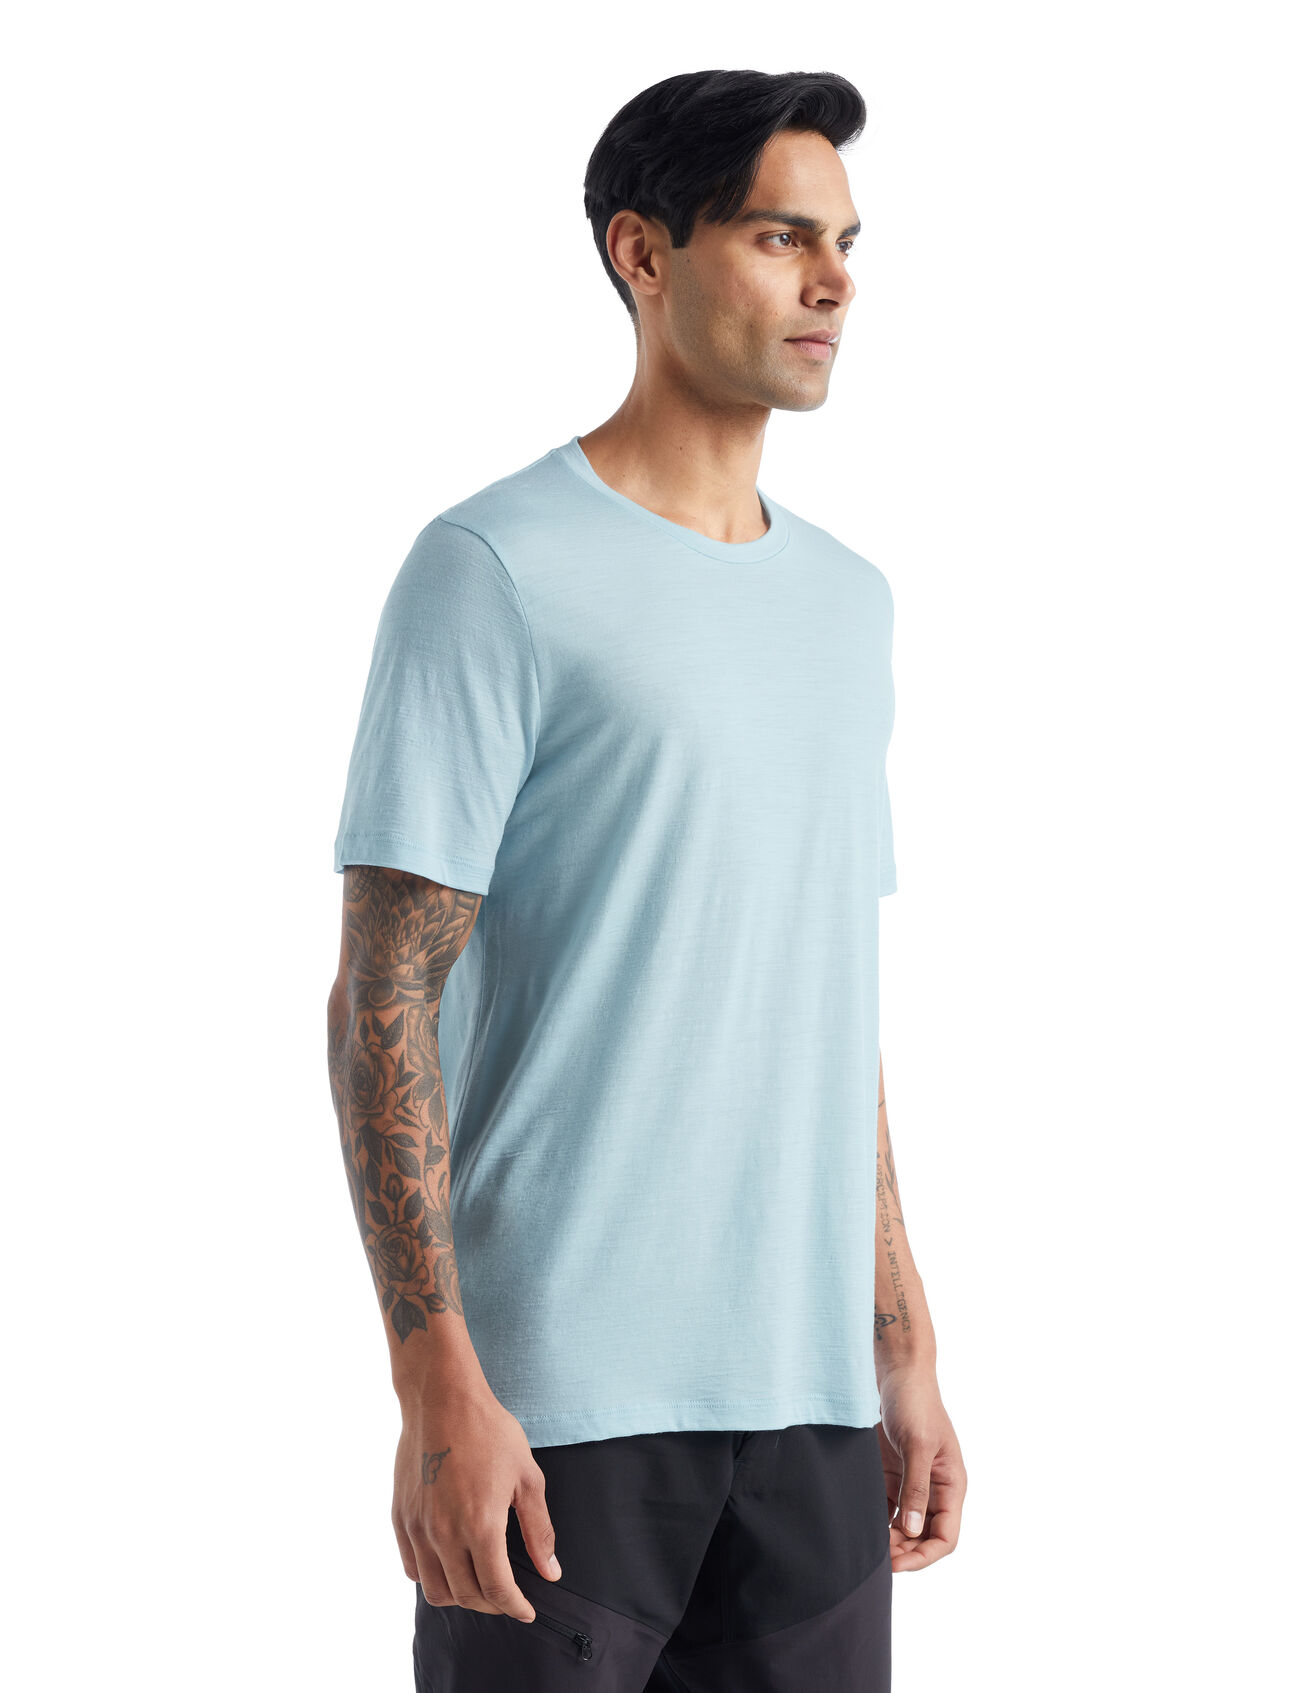 Merino Tech Lite II Short Sleeve T-Shirt